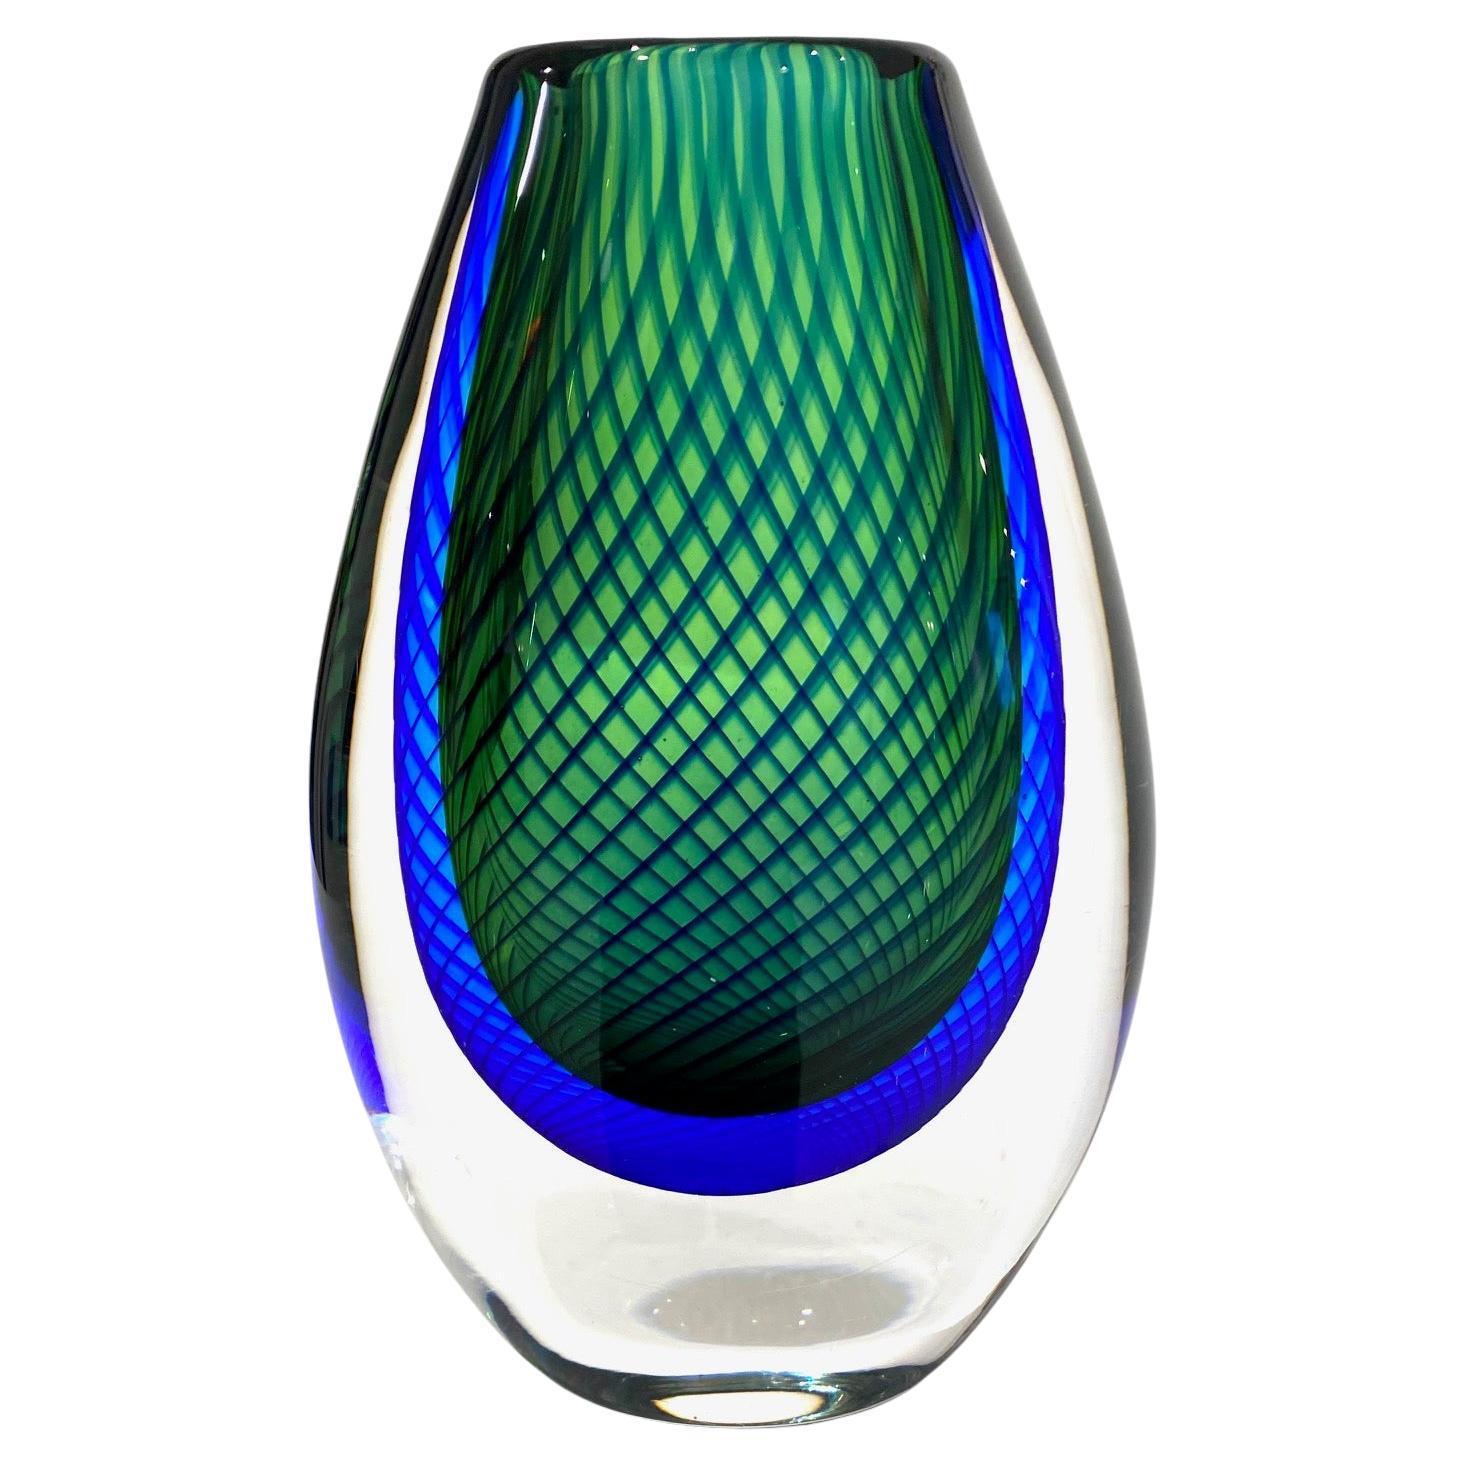 Vase en verre bleu et vert de Vicki Lindstrand pour Kosta Boda